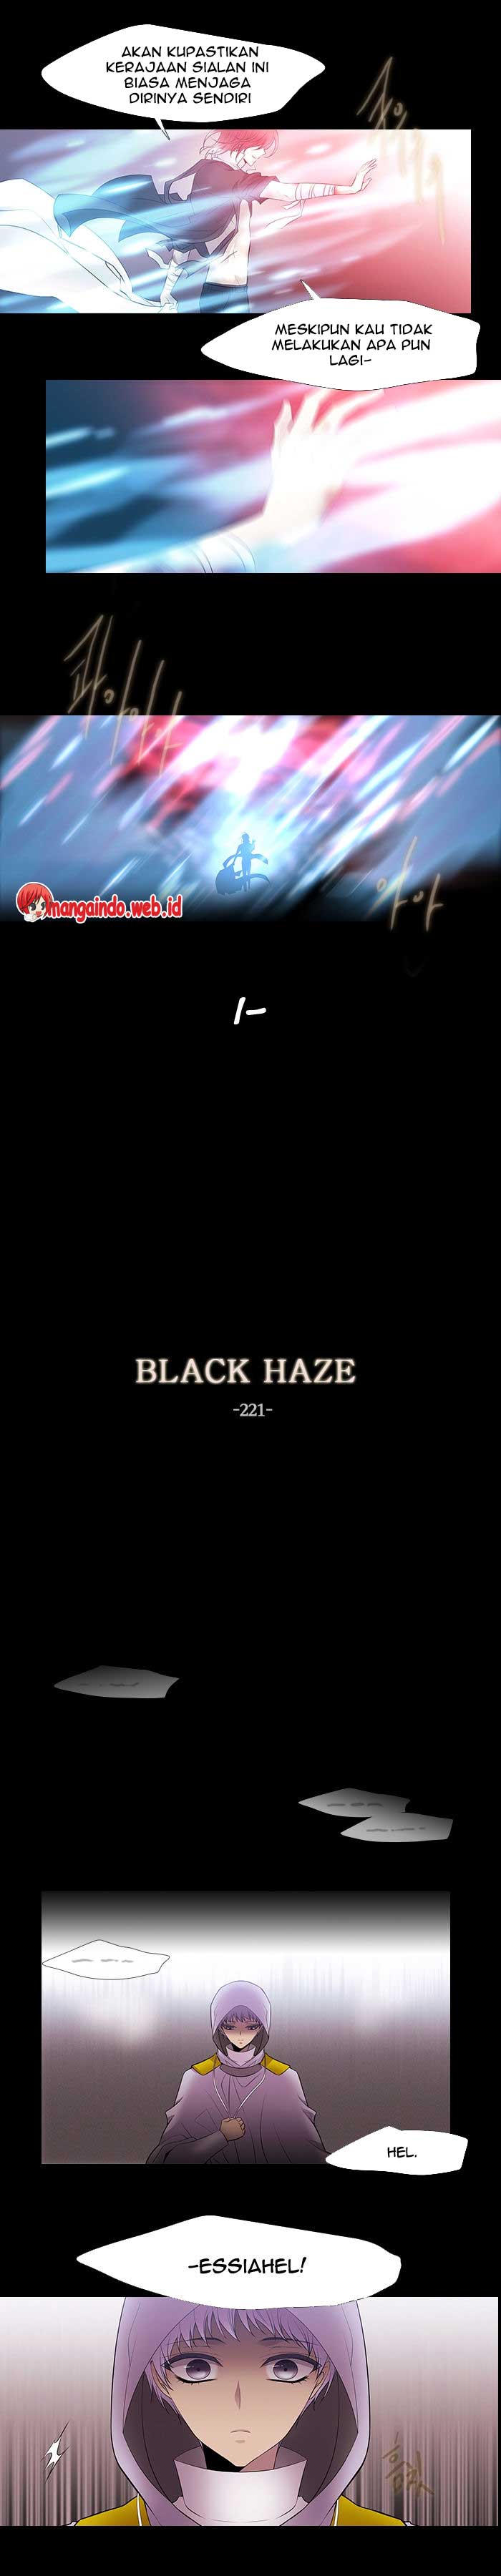 Black Haze Chapter 221